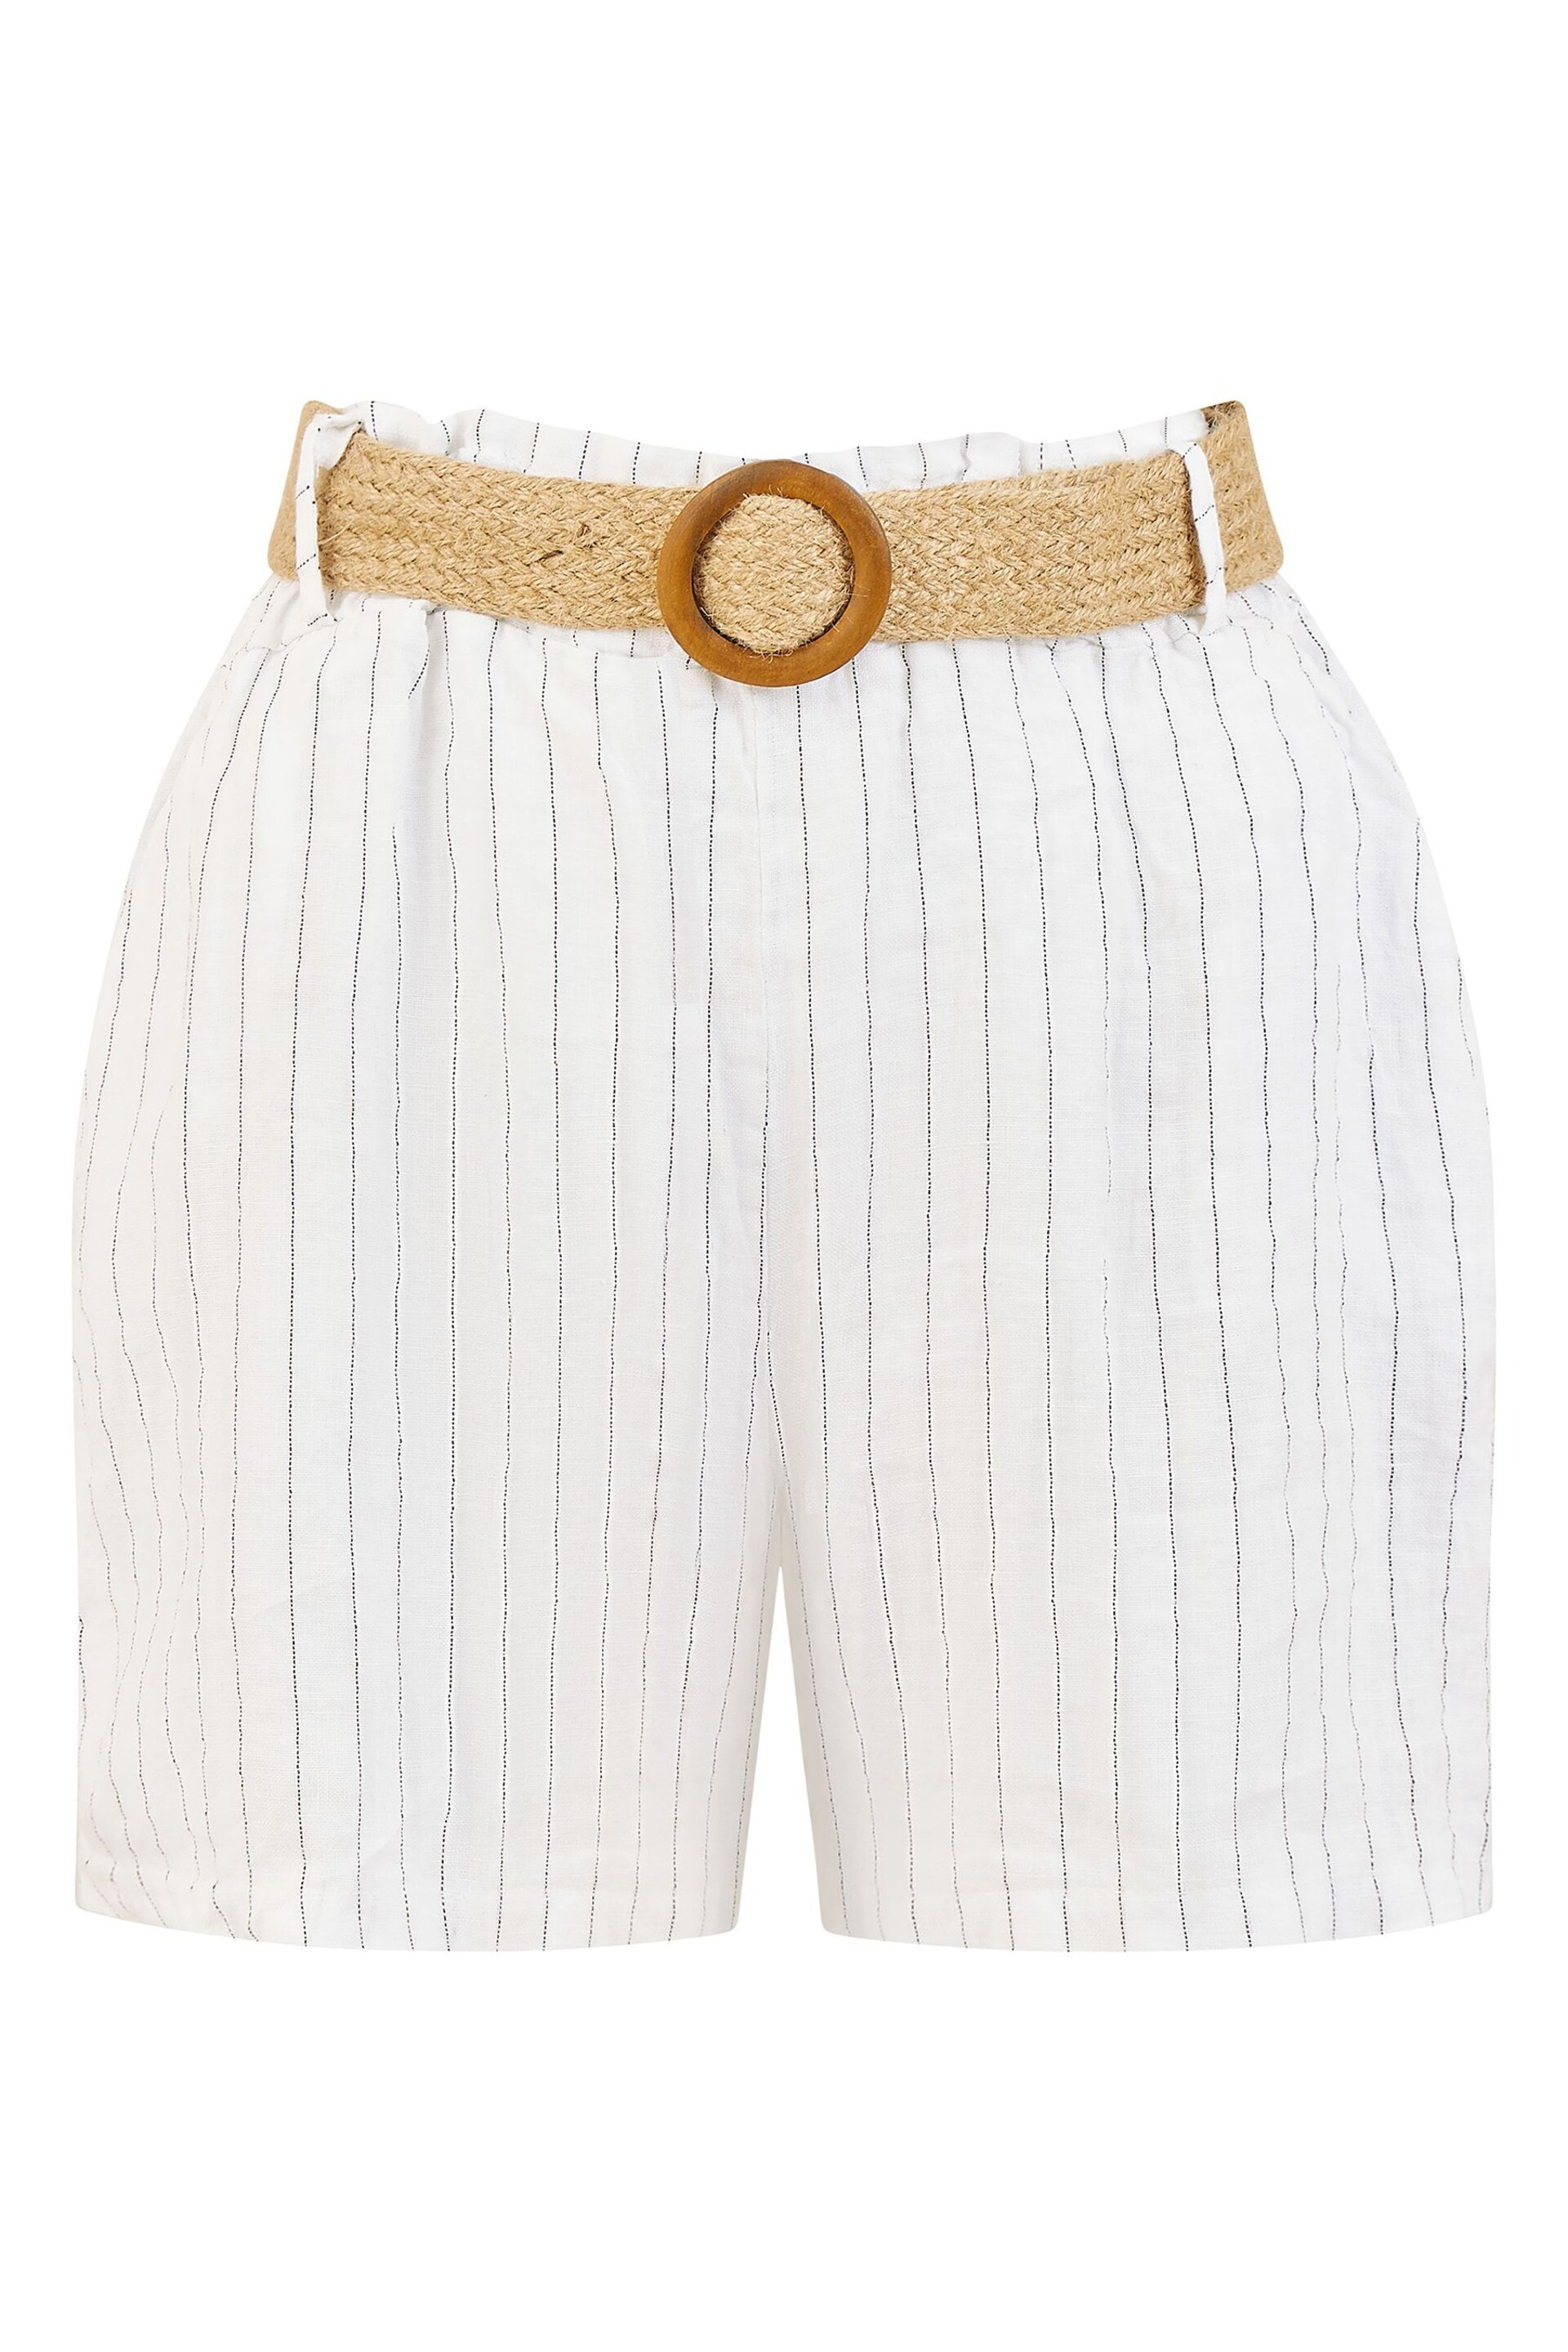 Yumi White Striped Italian Linen Shorts With Belt - Image 4 of 4